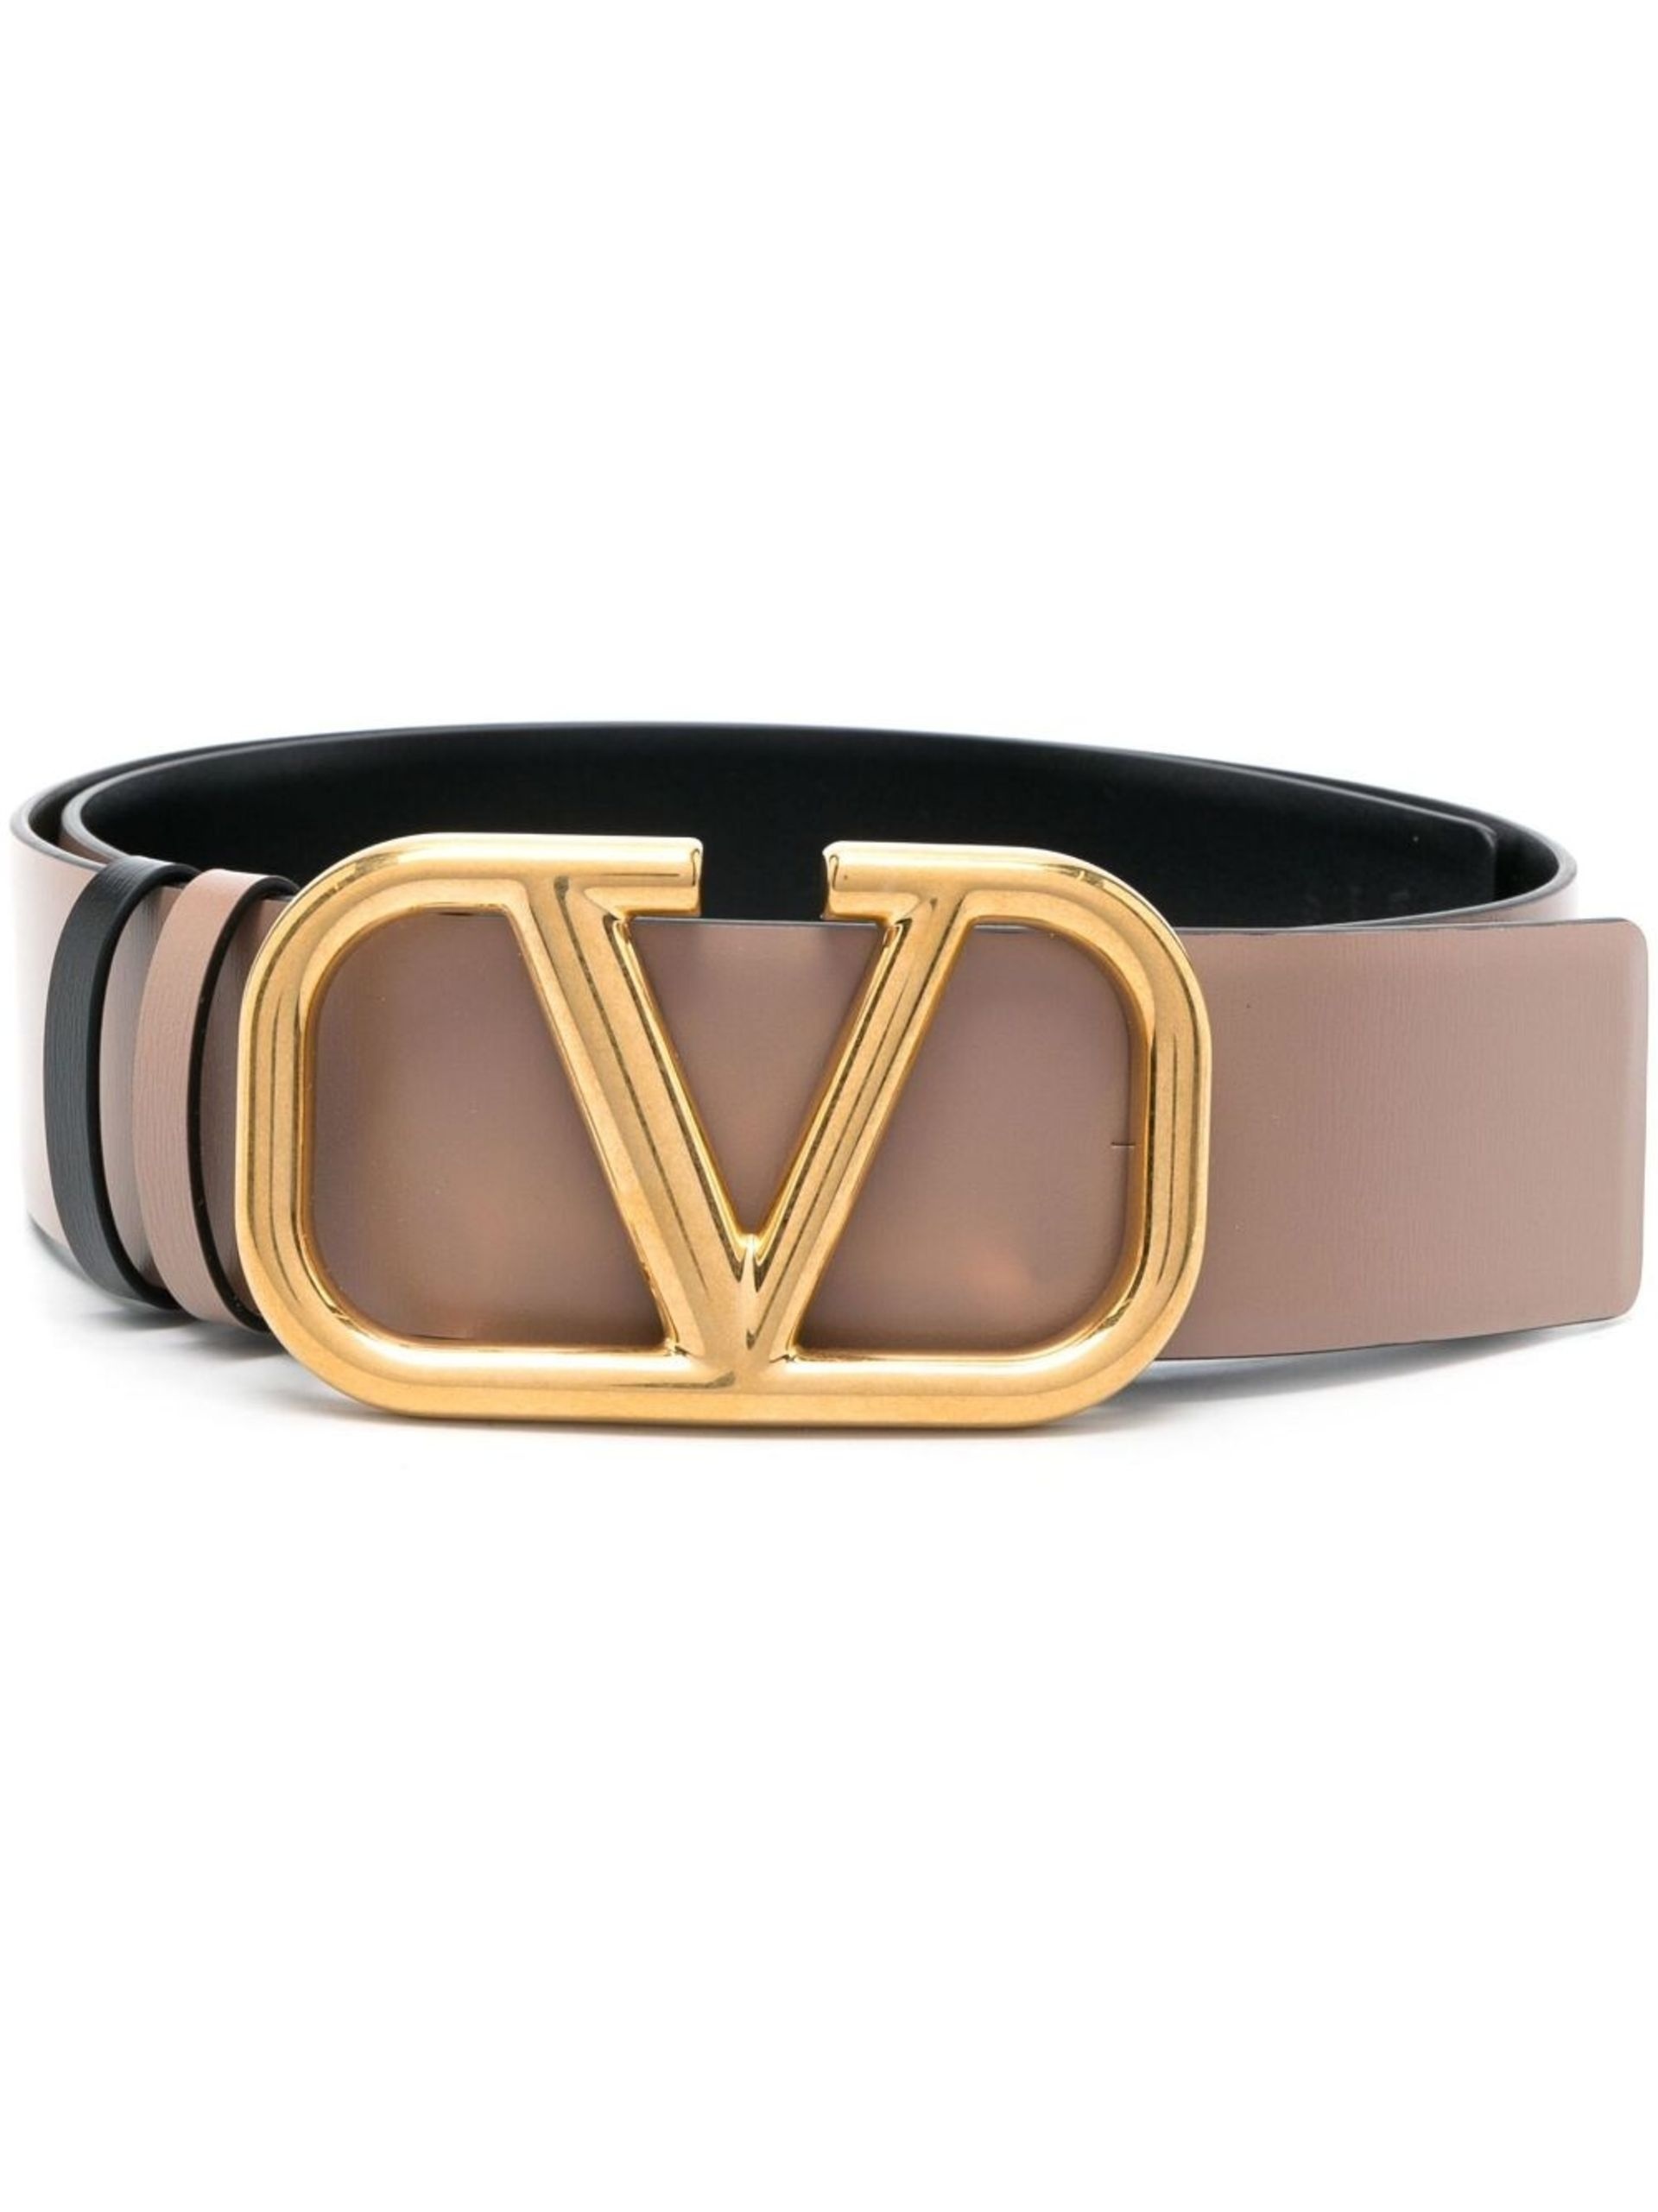 neutral VLogo leather belt - 1